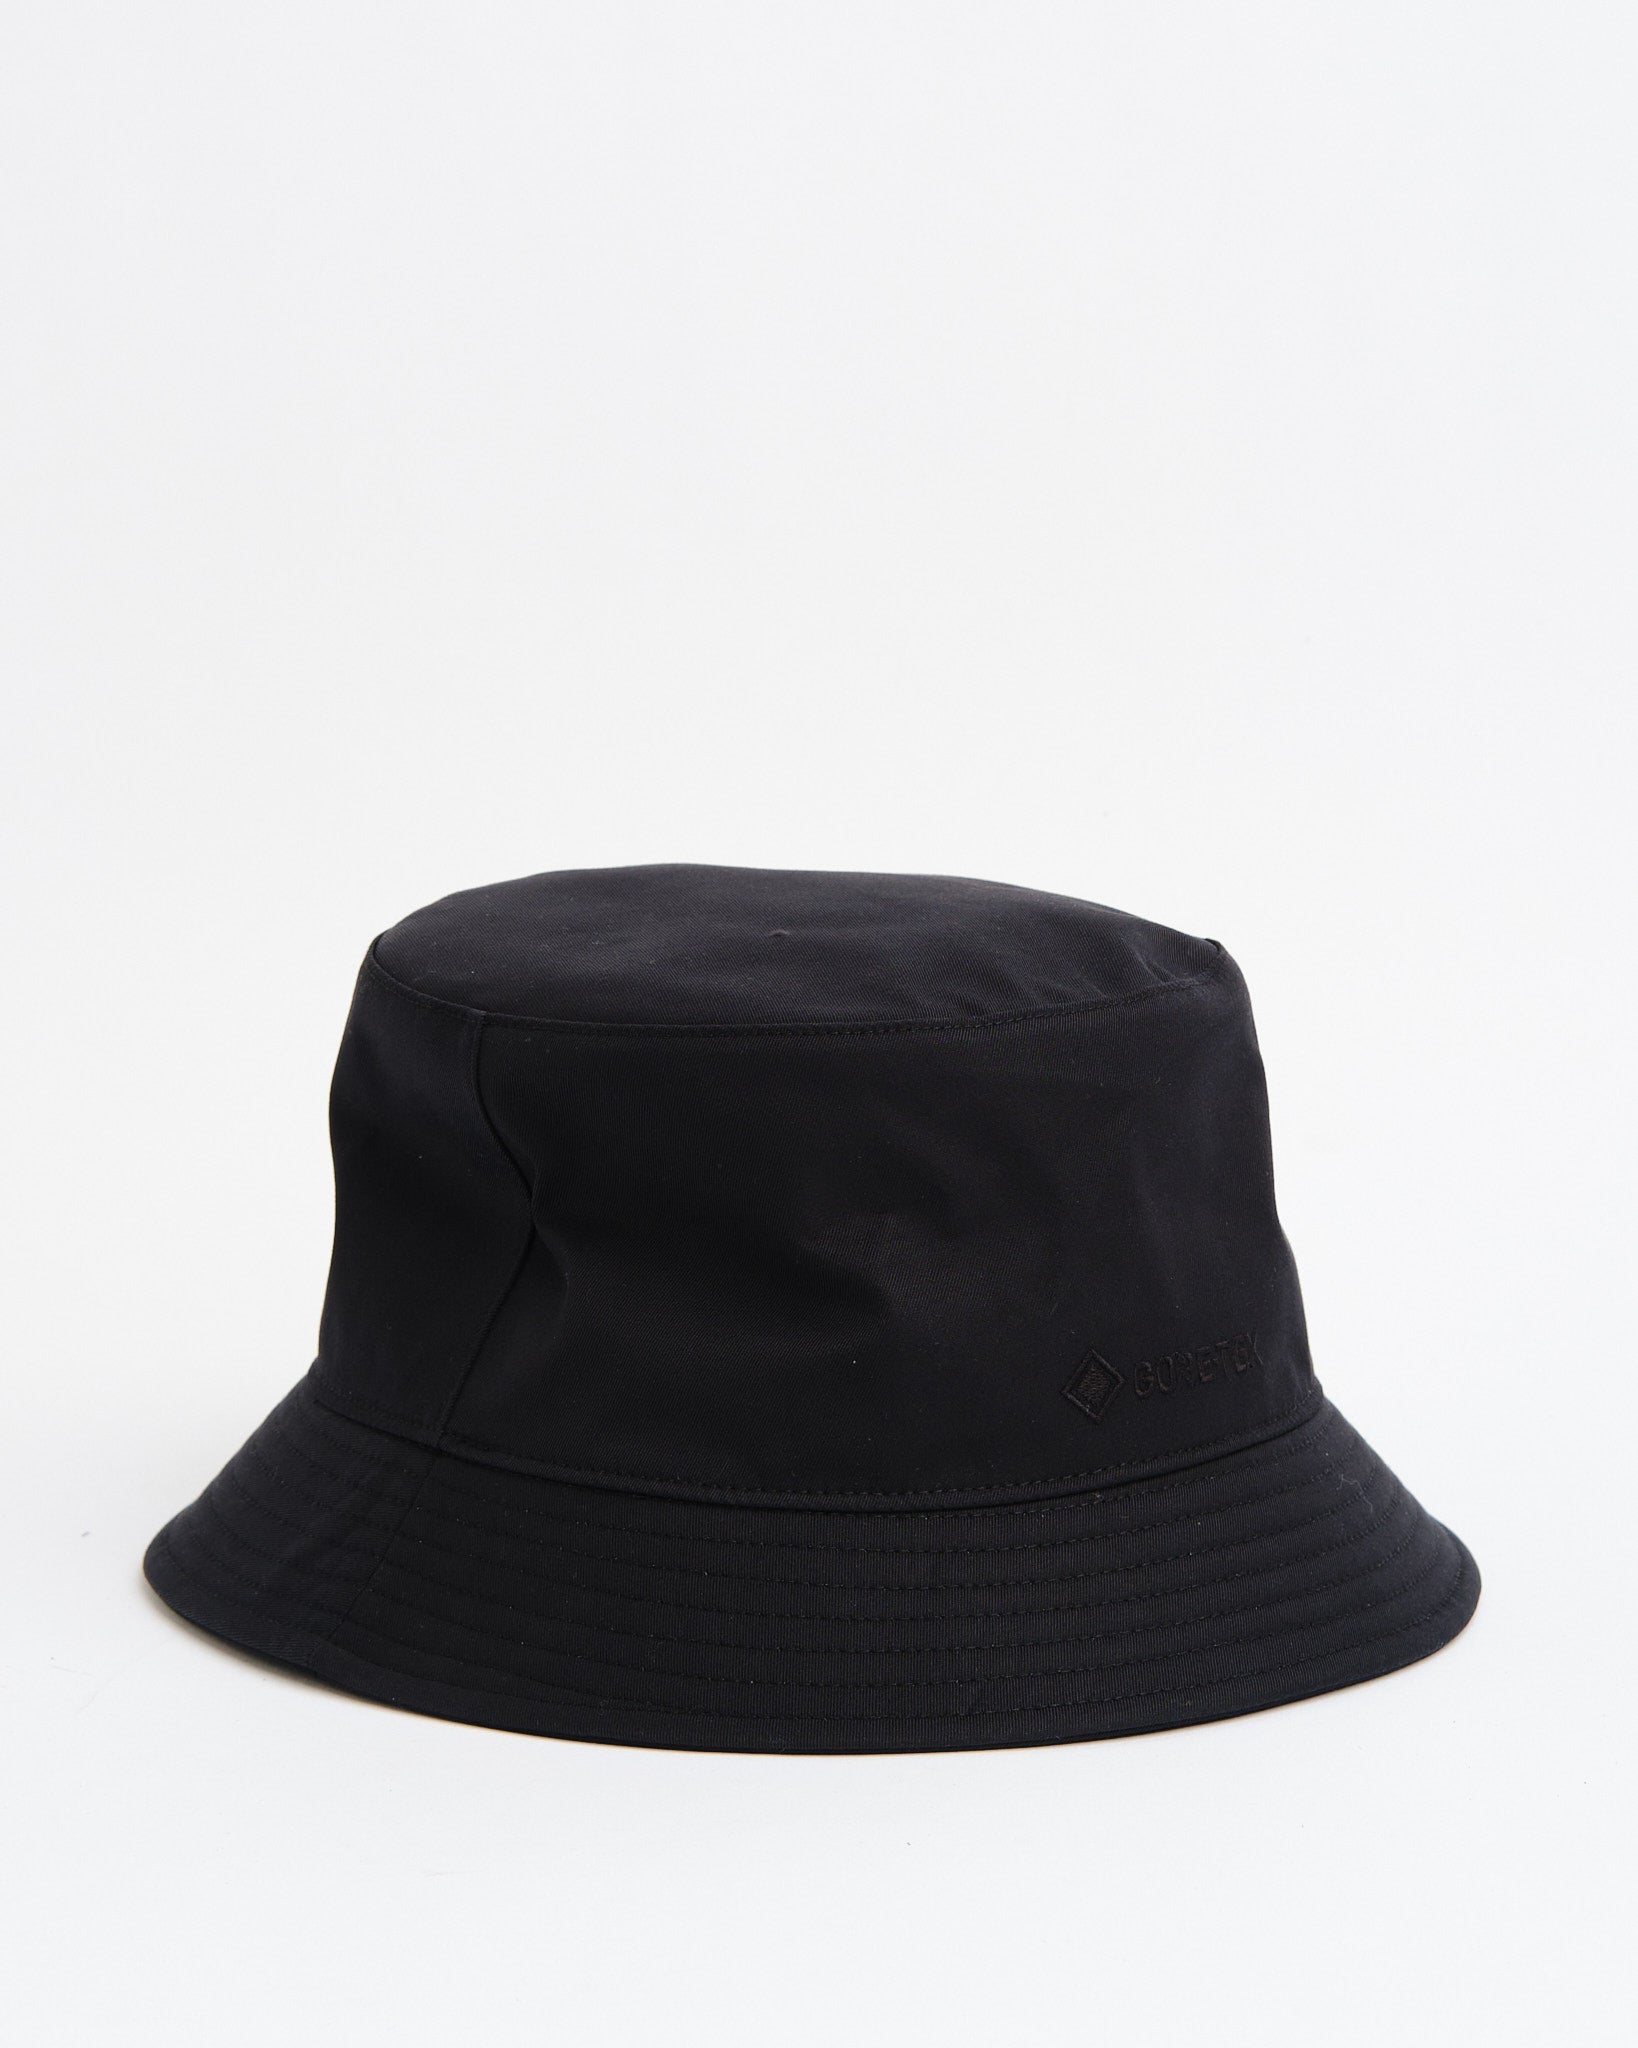 GORE-TEX Hat Black - Meadow